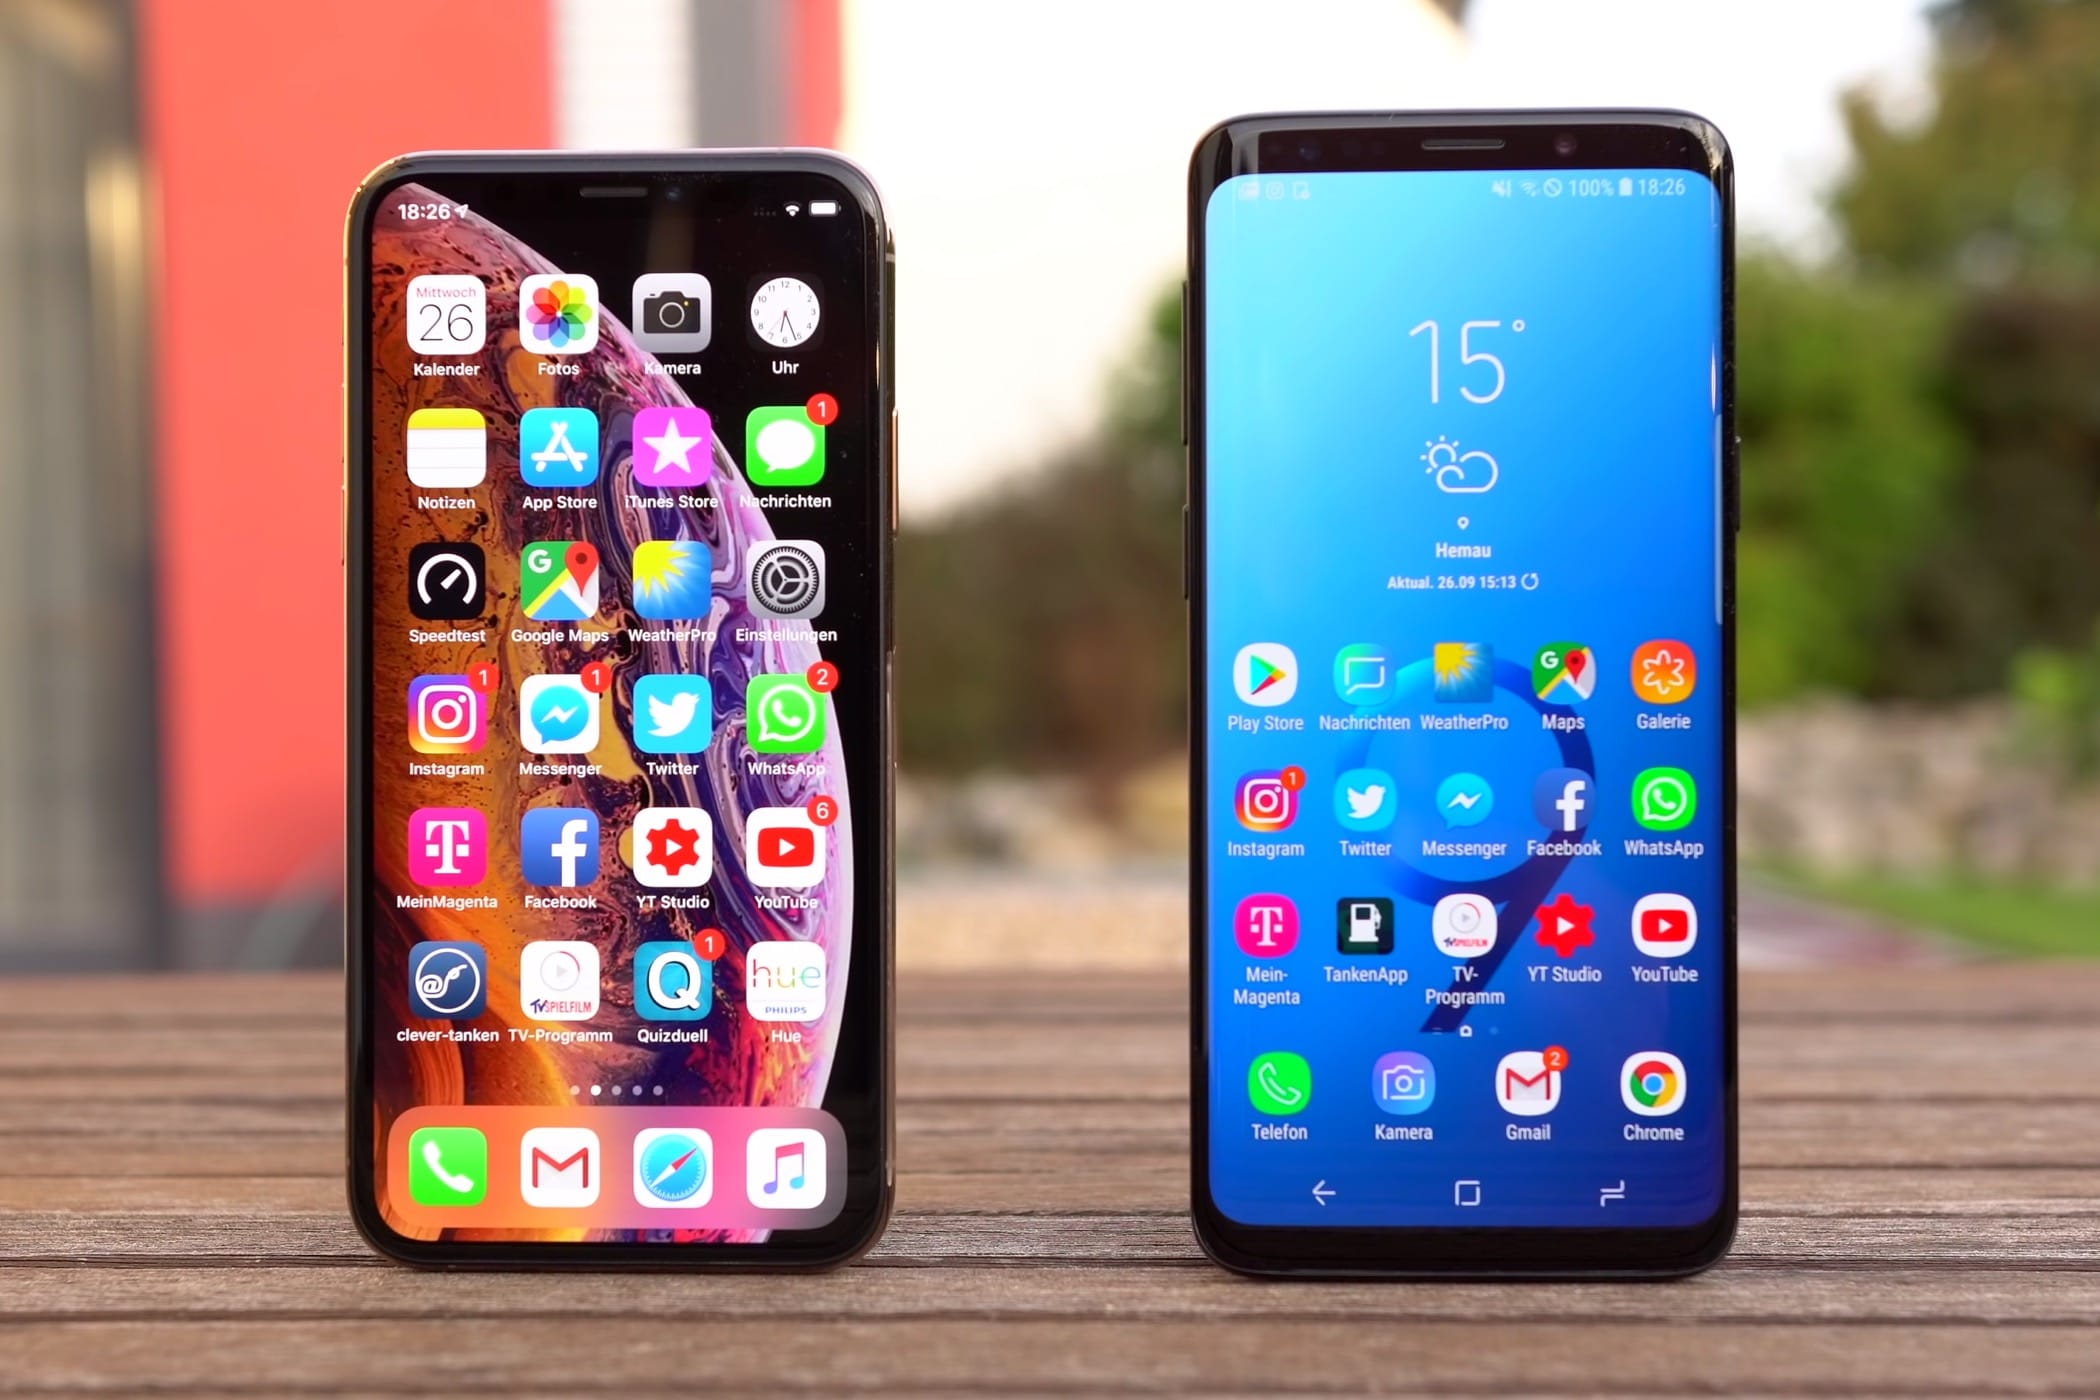 Samsung iphone apple. Samsung Galaxy s9/s9. Iphone XS vs Samsung s9. Iphone XS vs s8. Samsung s9 vs iphone x.